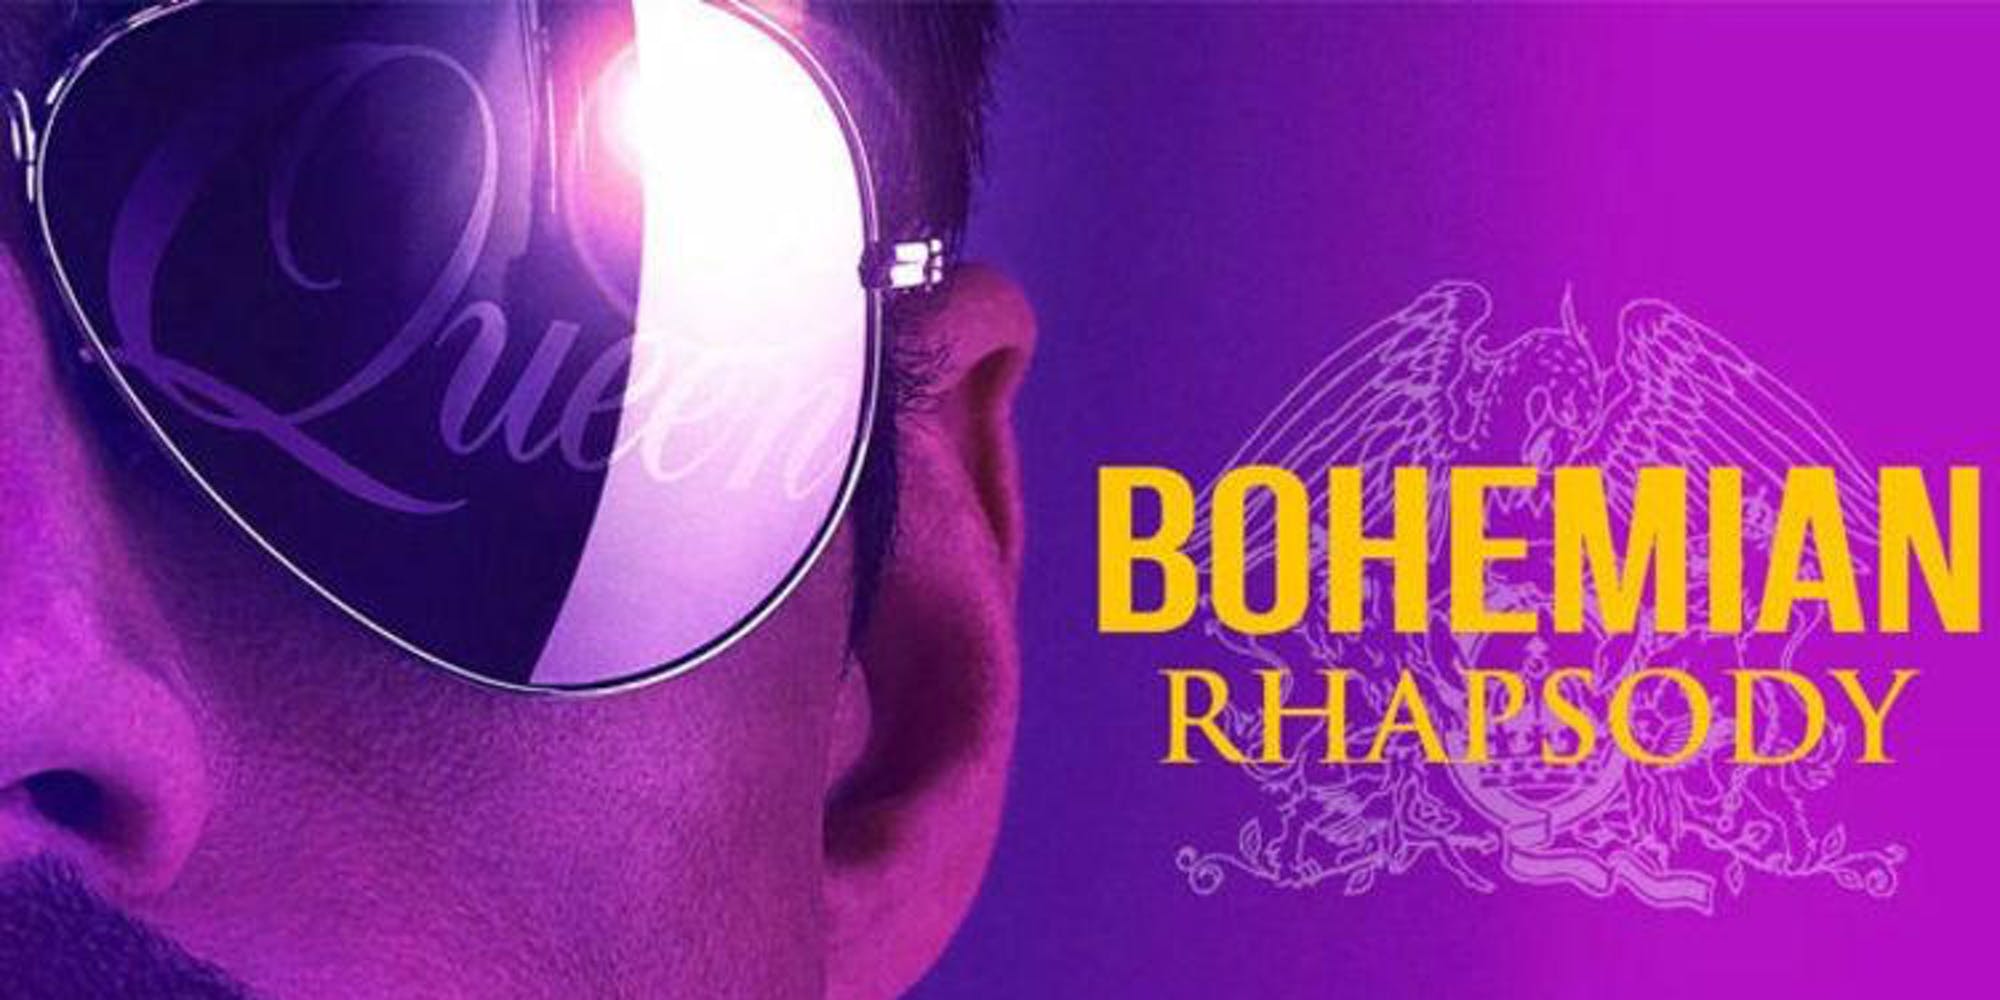 Download Subs: Bohemian Rhapsody Subtitle [English] Srt 2018- Subtitle ...